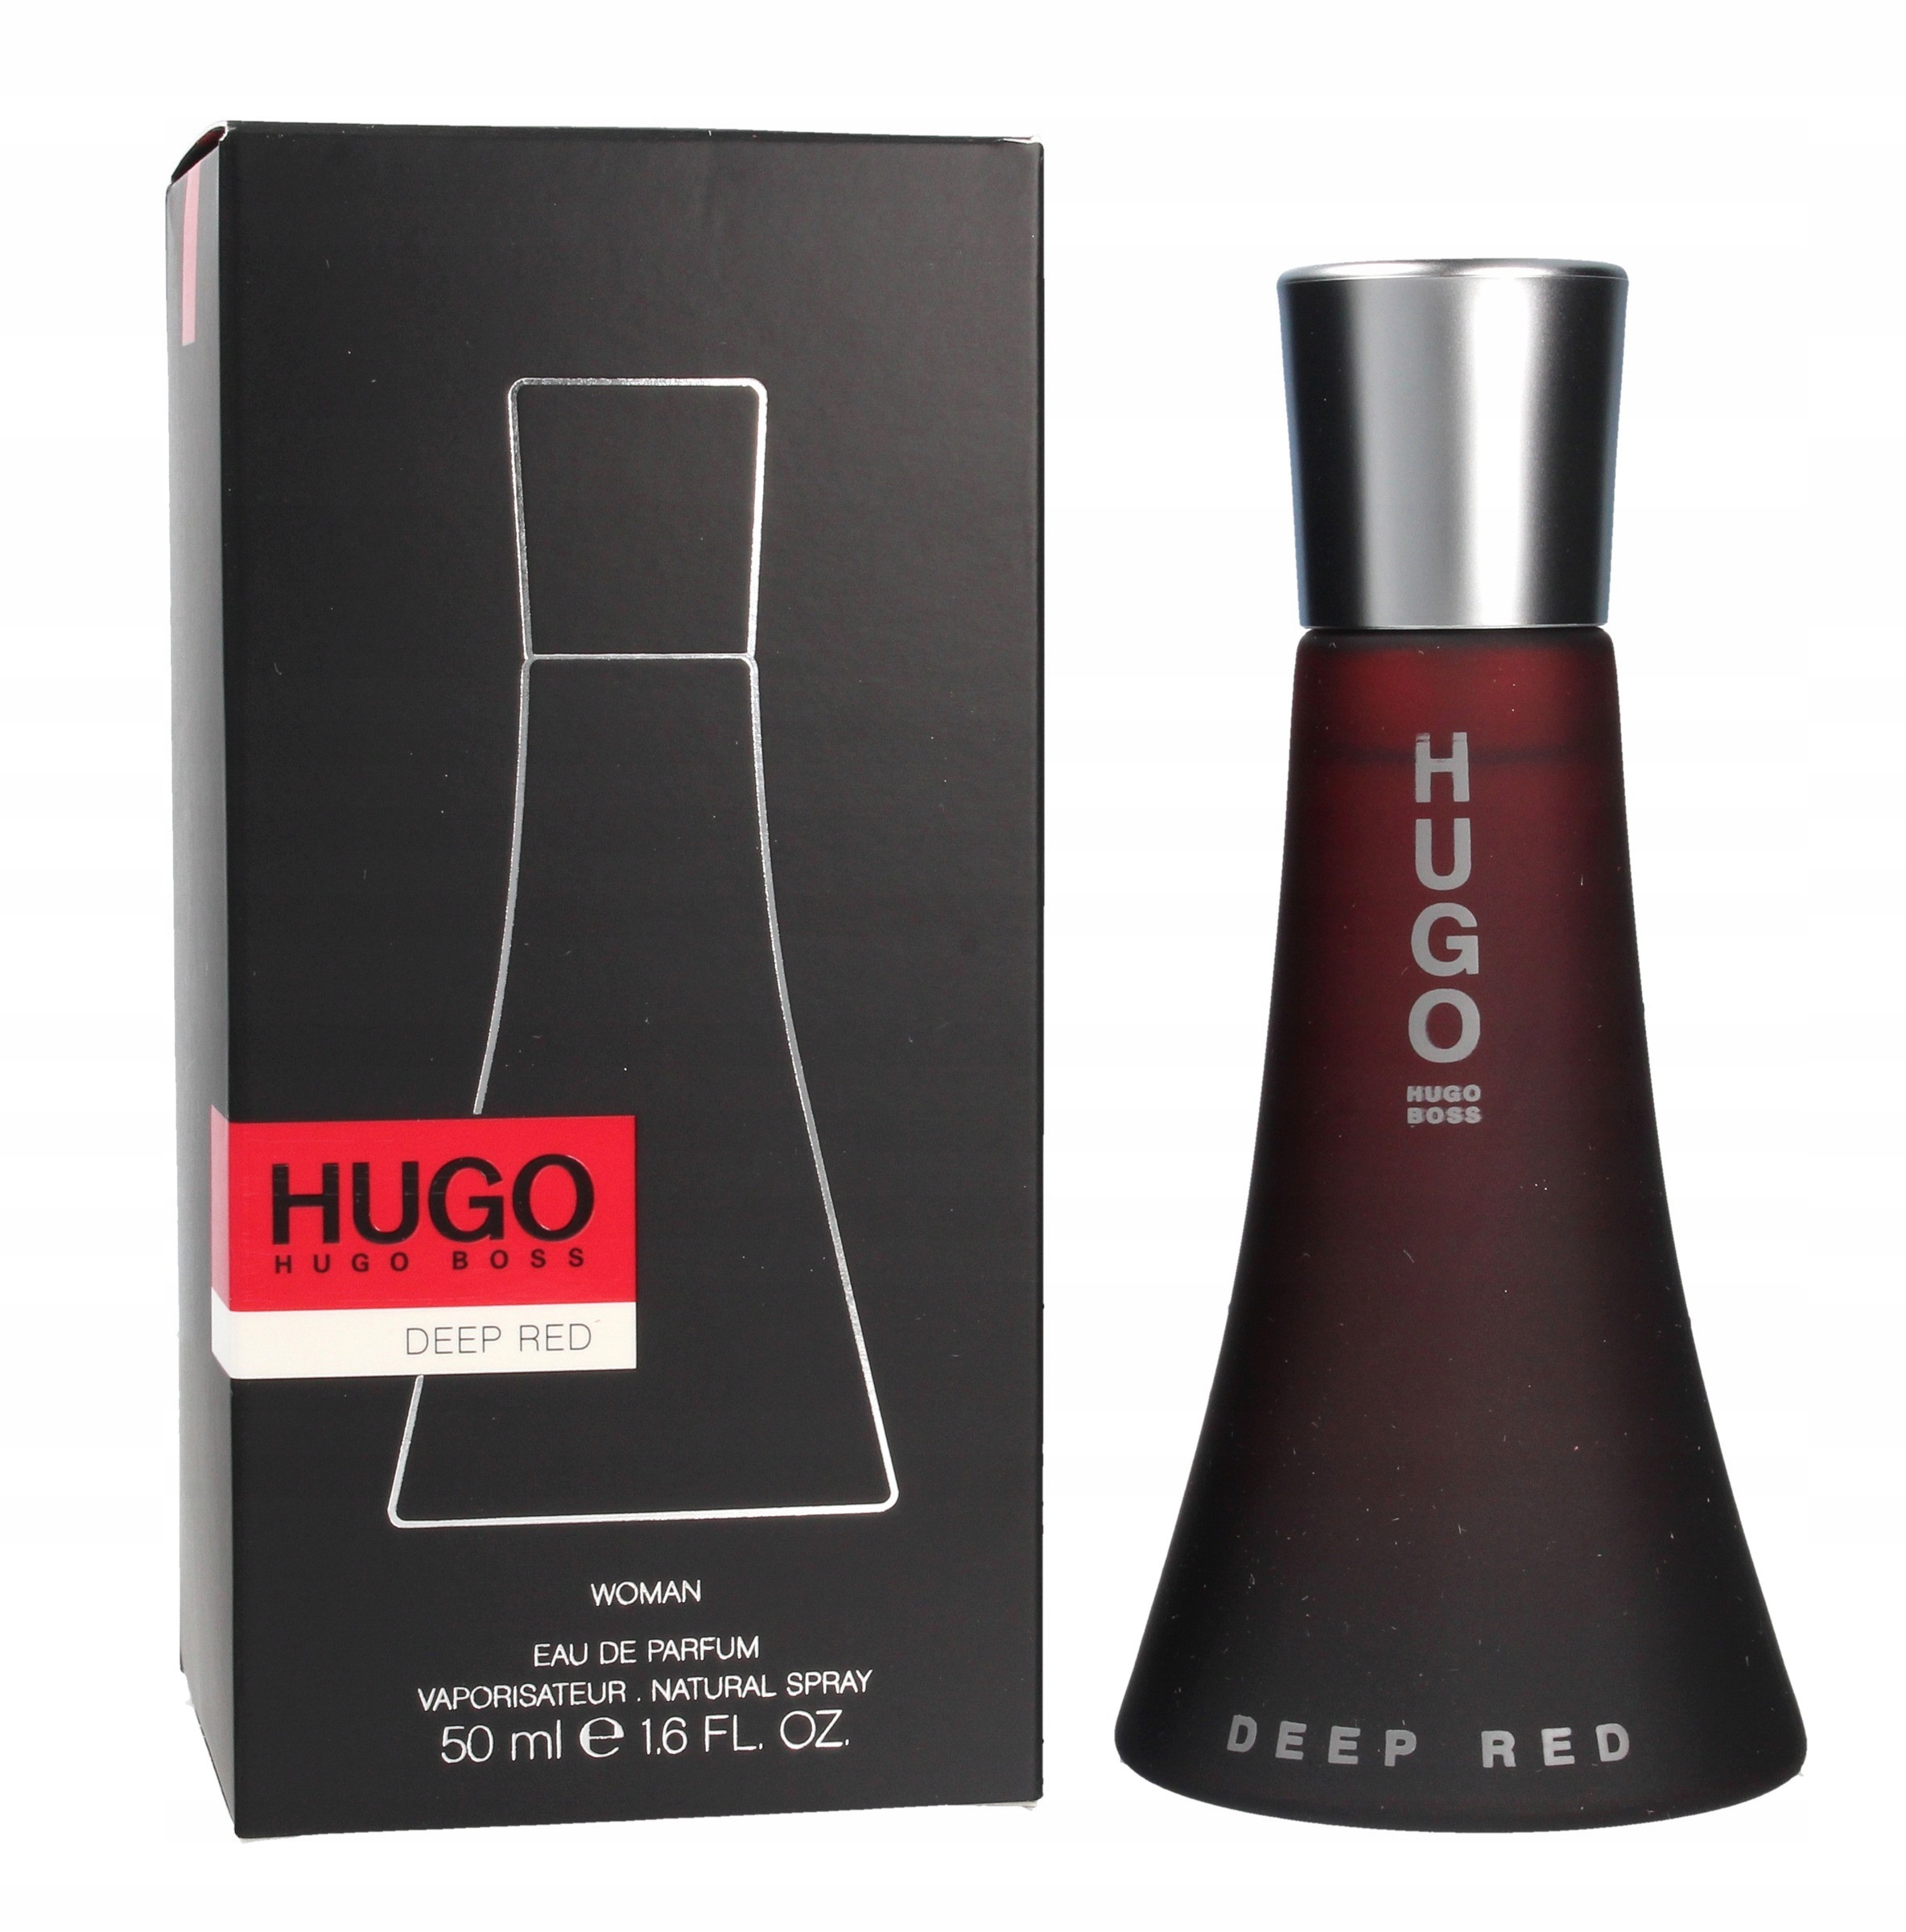 Хуго босс ред. Духи Хьюго дип ред. Boss Hugo Deep Red 90ml EDP. Туалетная вода Hugo Boss Deep Red. Туалетная вода Hugo Boss woman 50 ml.